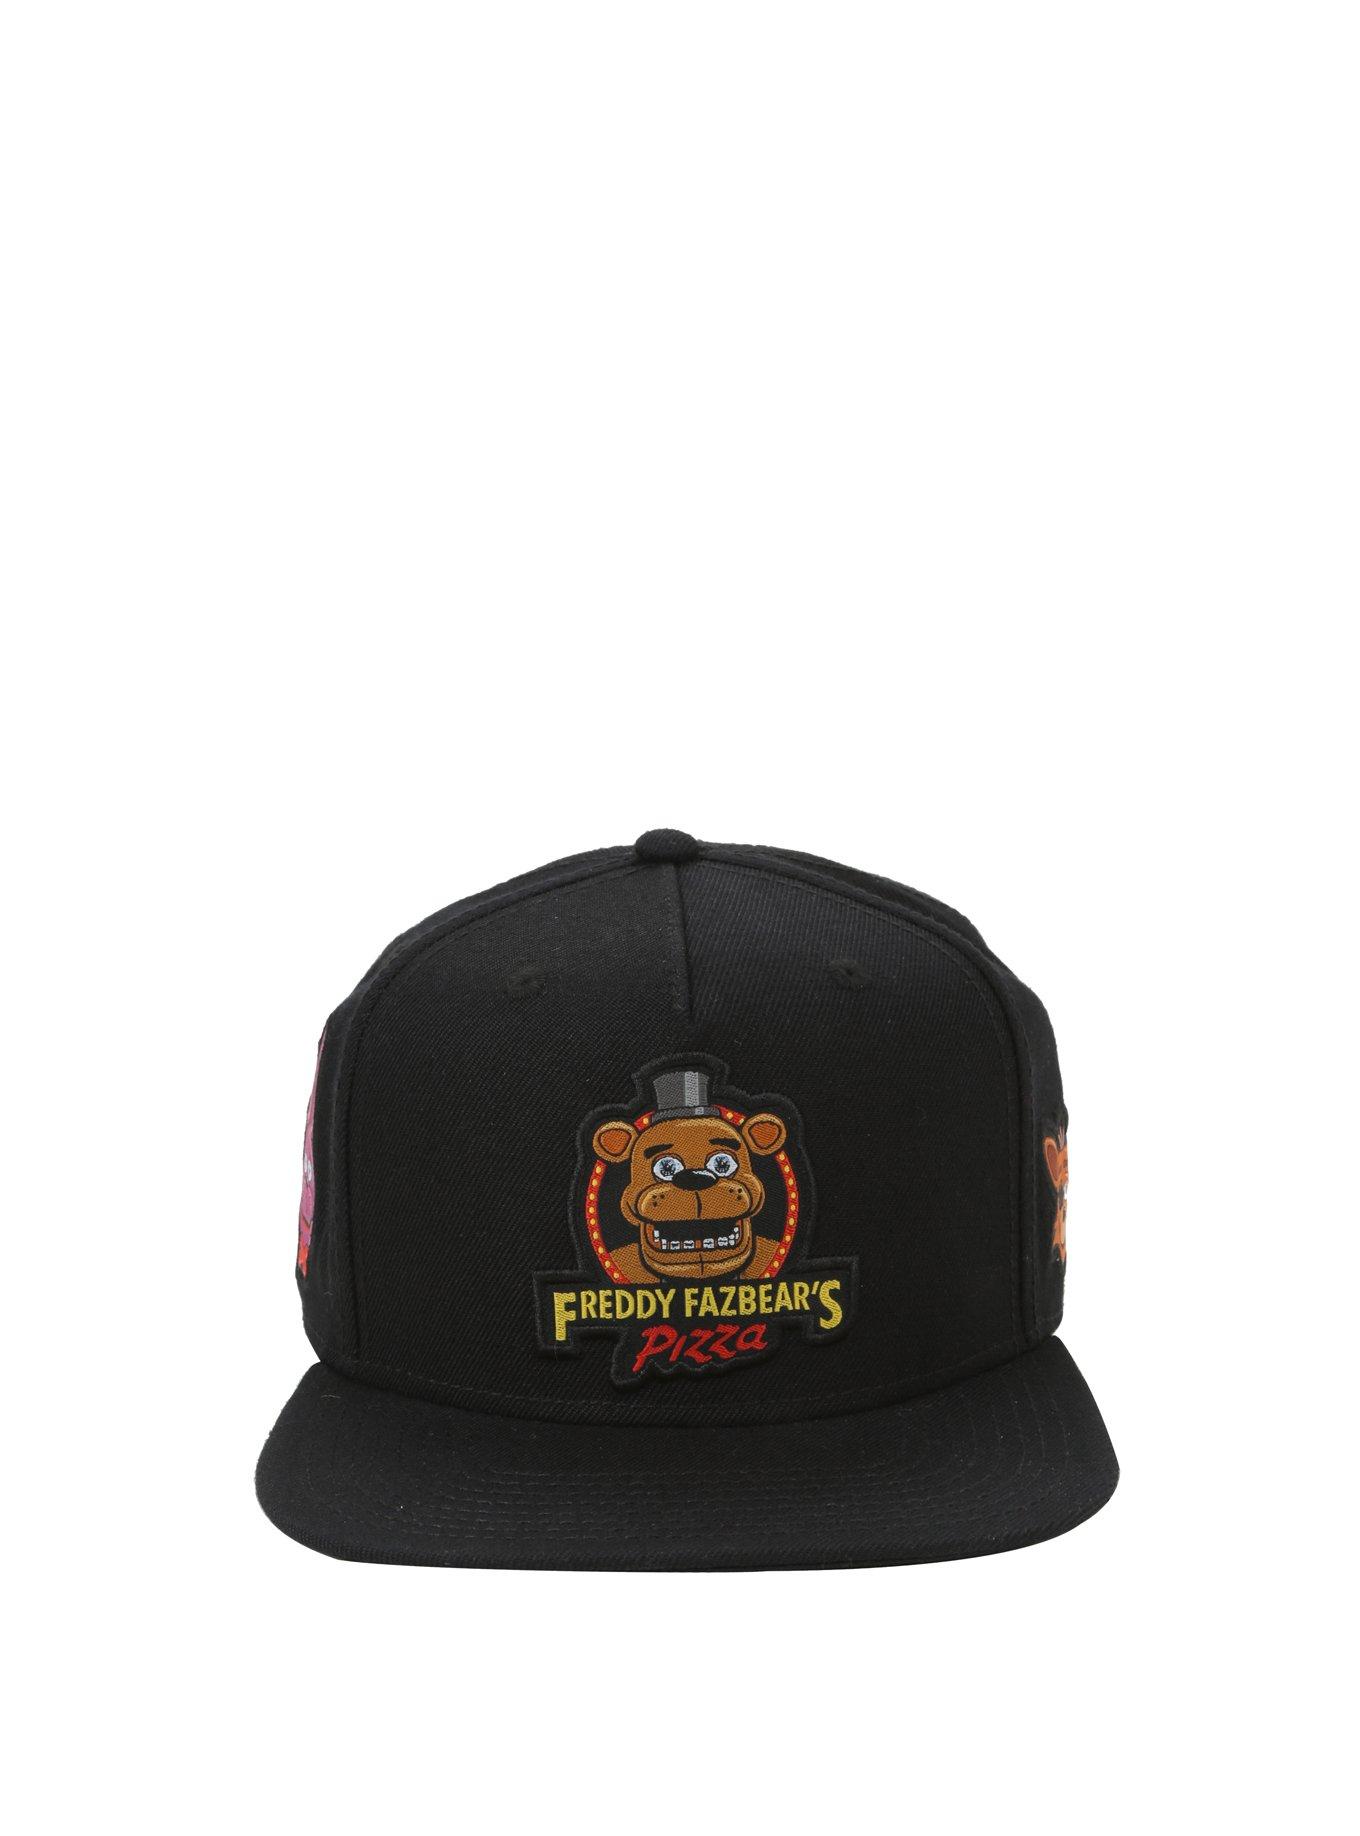 Five Nights At Freddy's Freddy Fazbear’s Pizza Characters Snapback Hat, , alternate